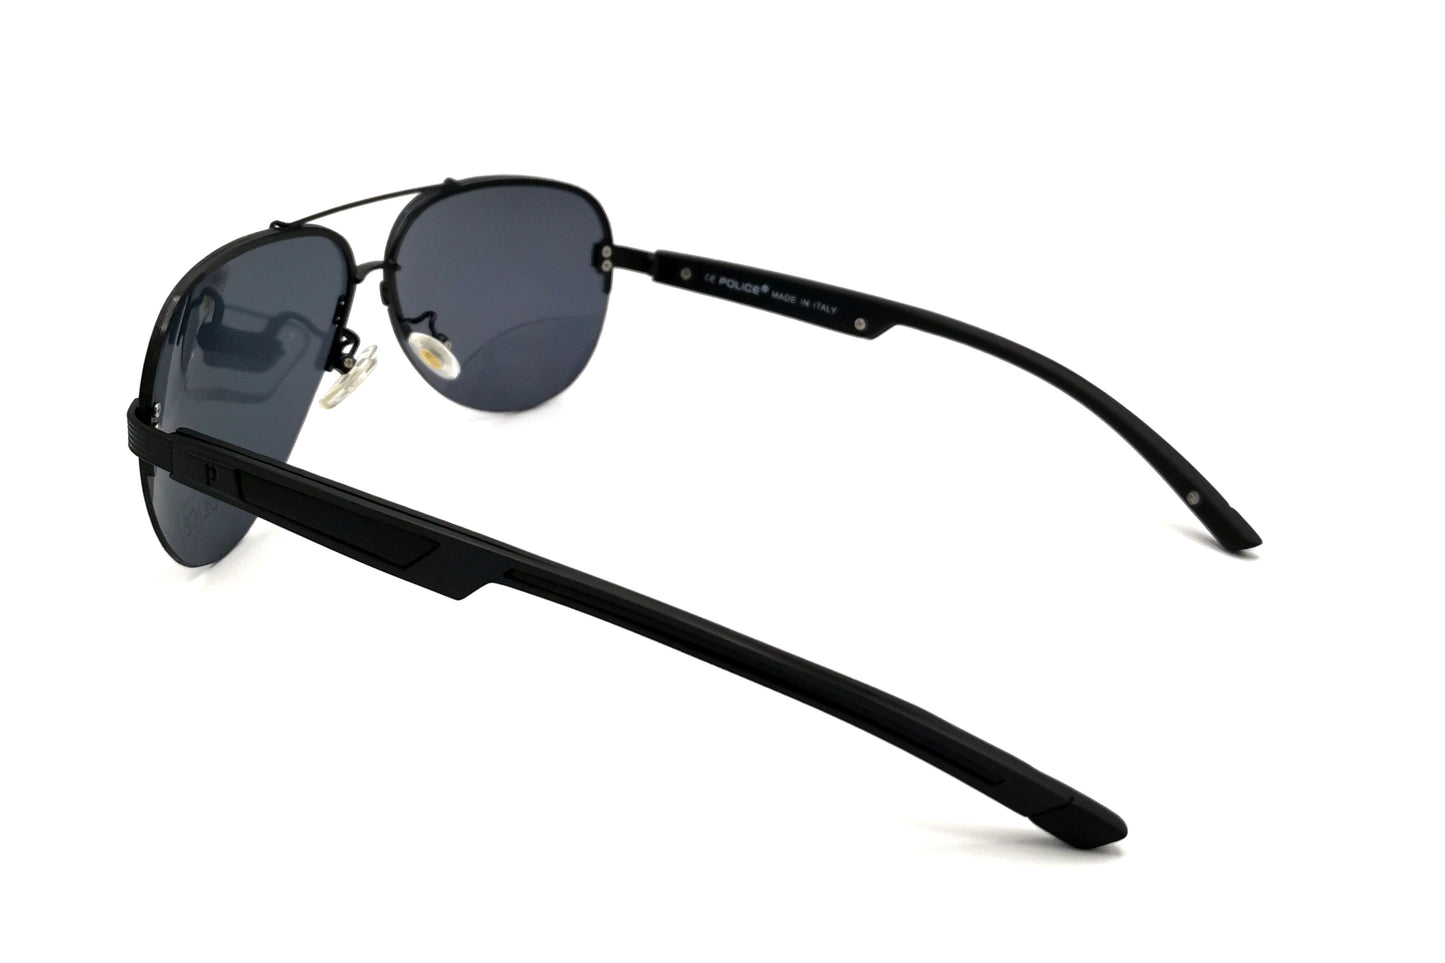 NS Deluxe - 6808 - Black - Sunglasses